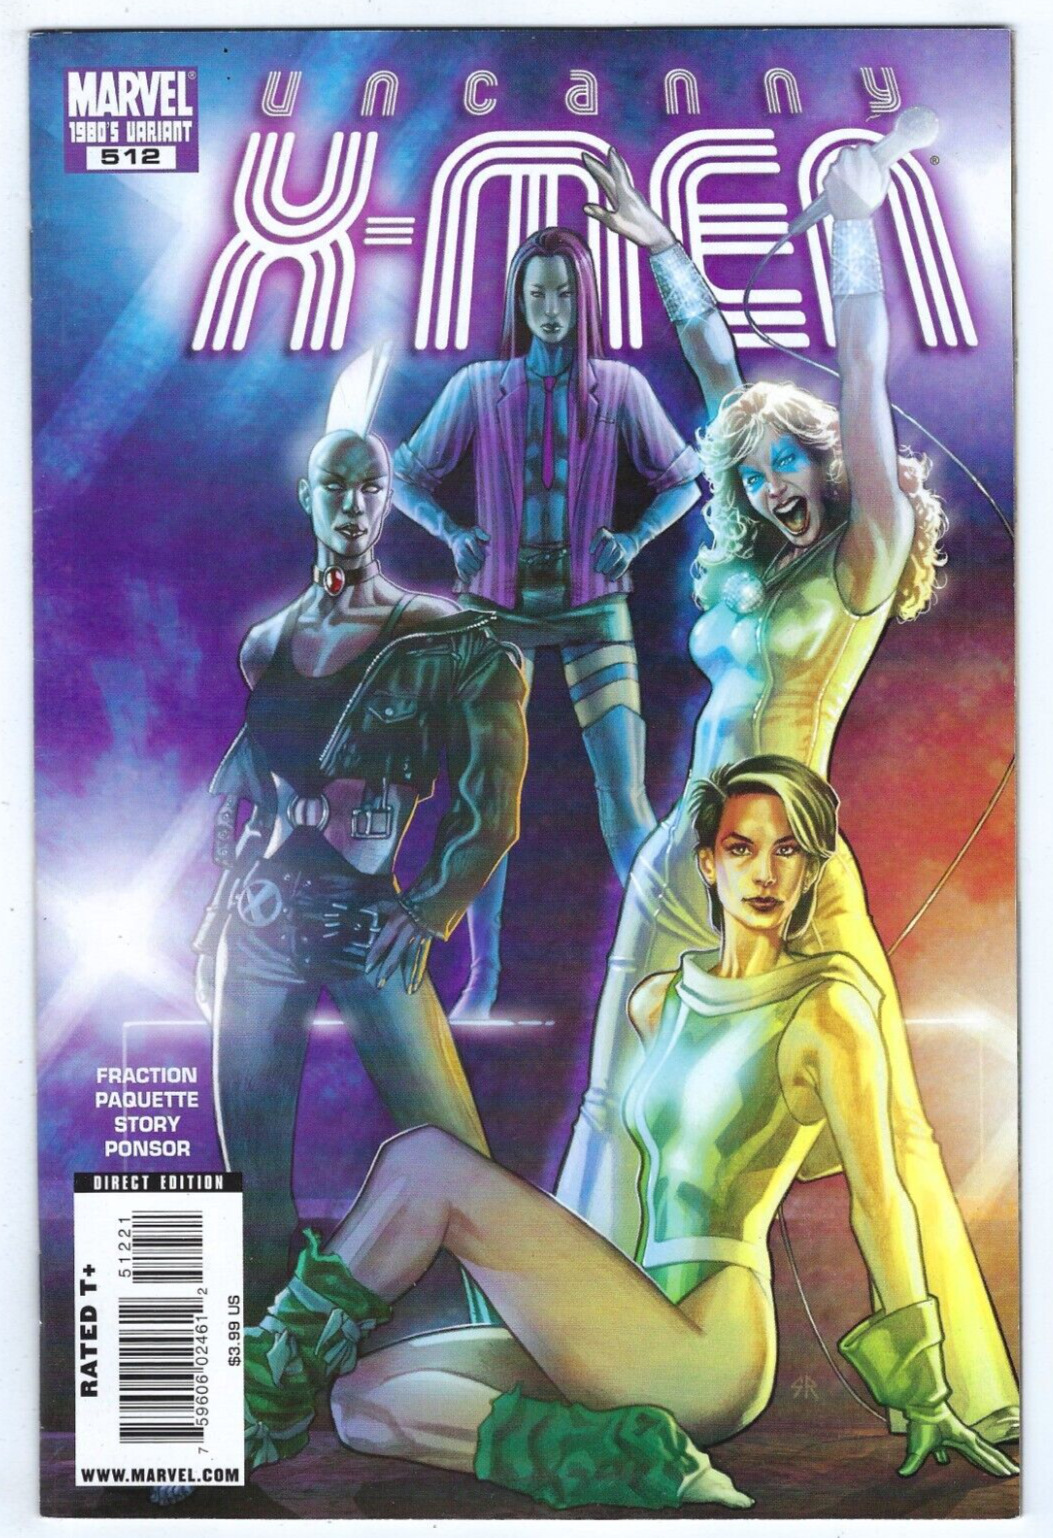 Marvel Comics UNCANNY X-MEN #512 first printing Stephane Roux 80\'s variant cover